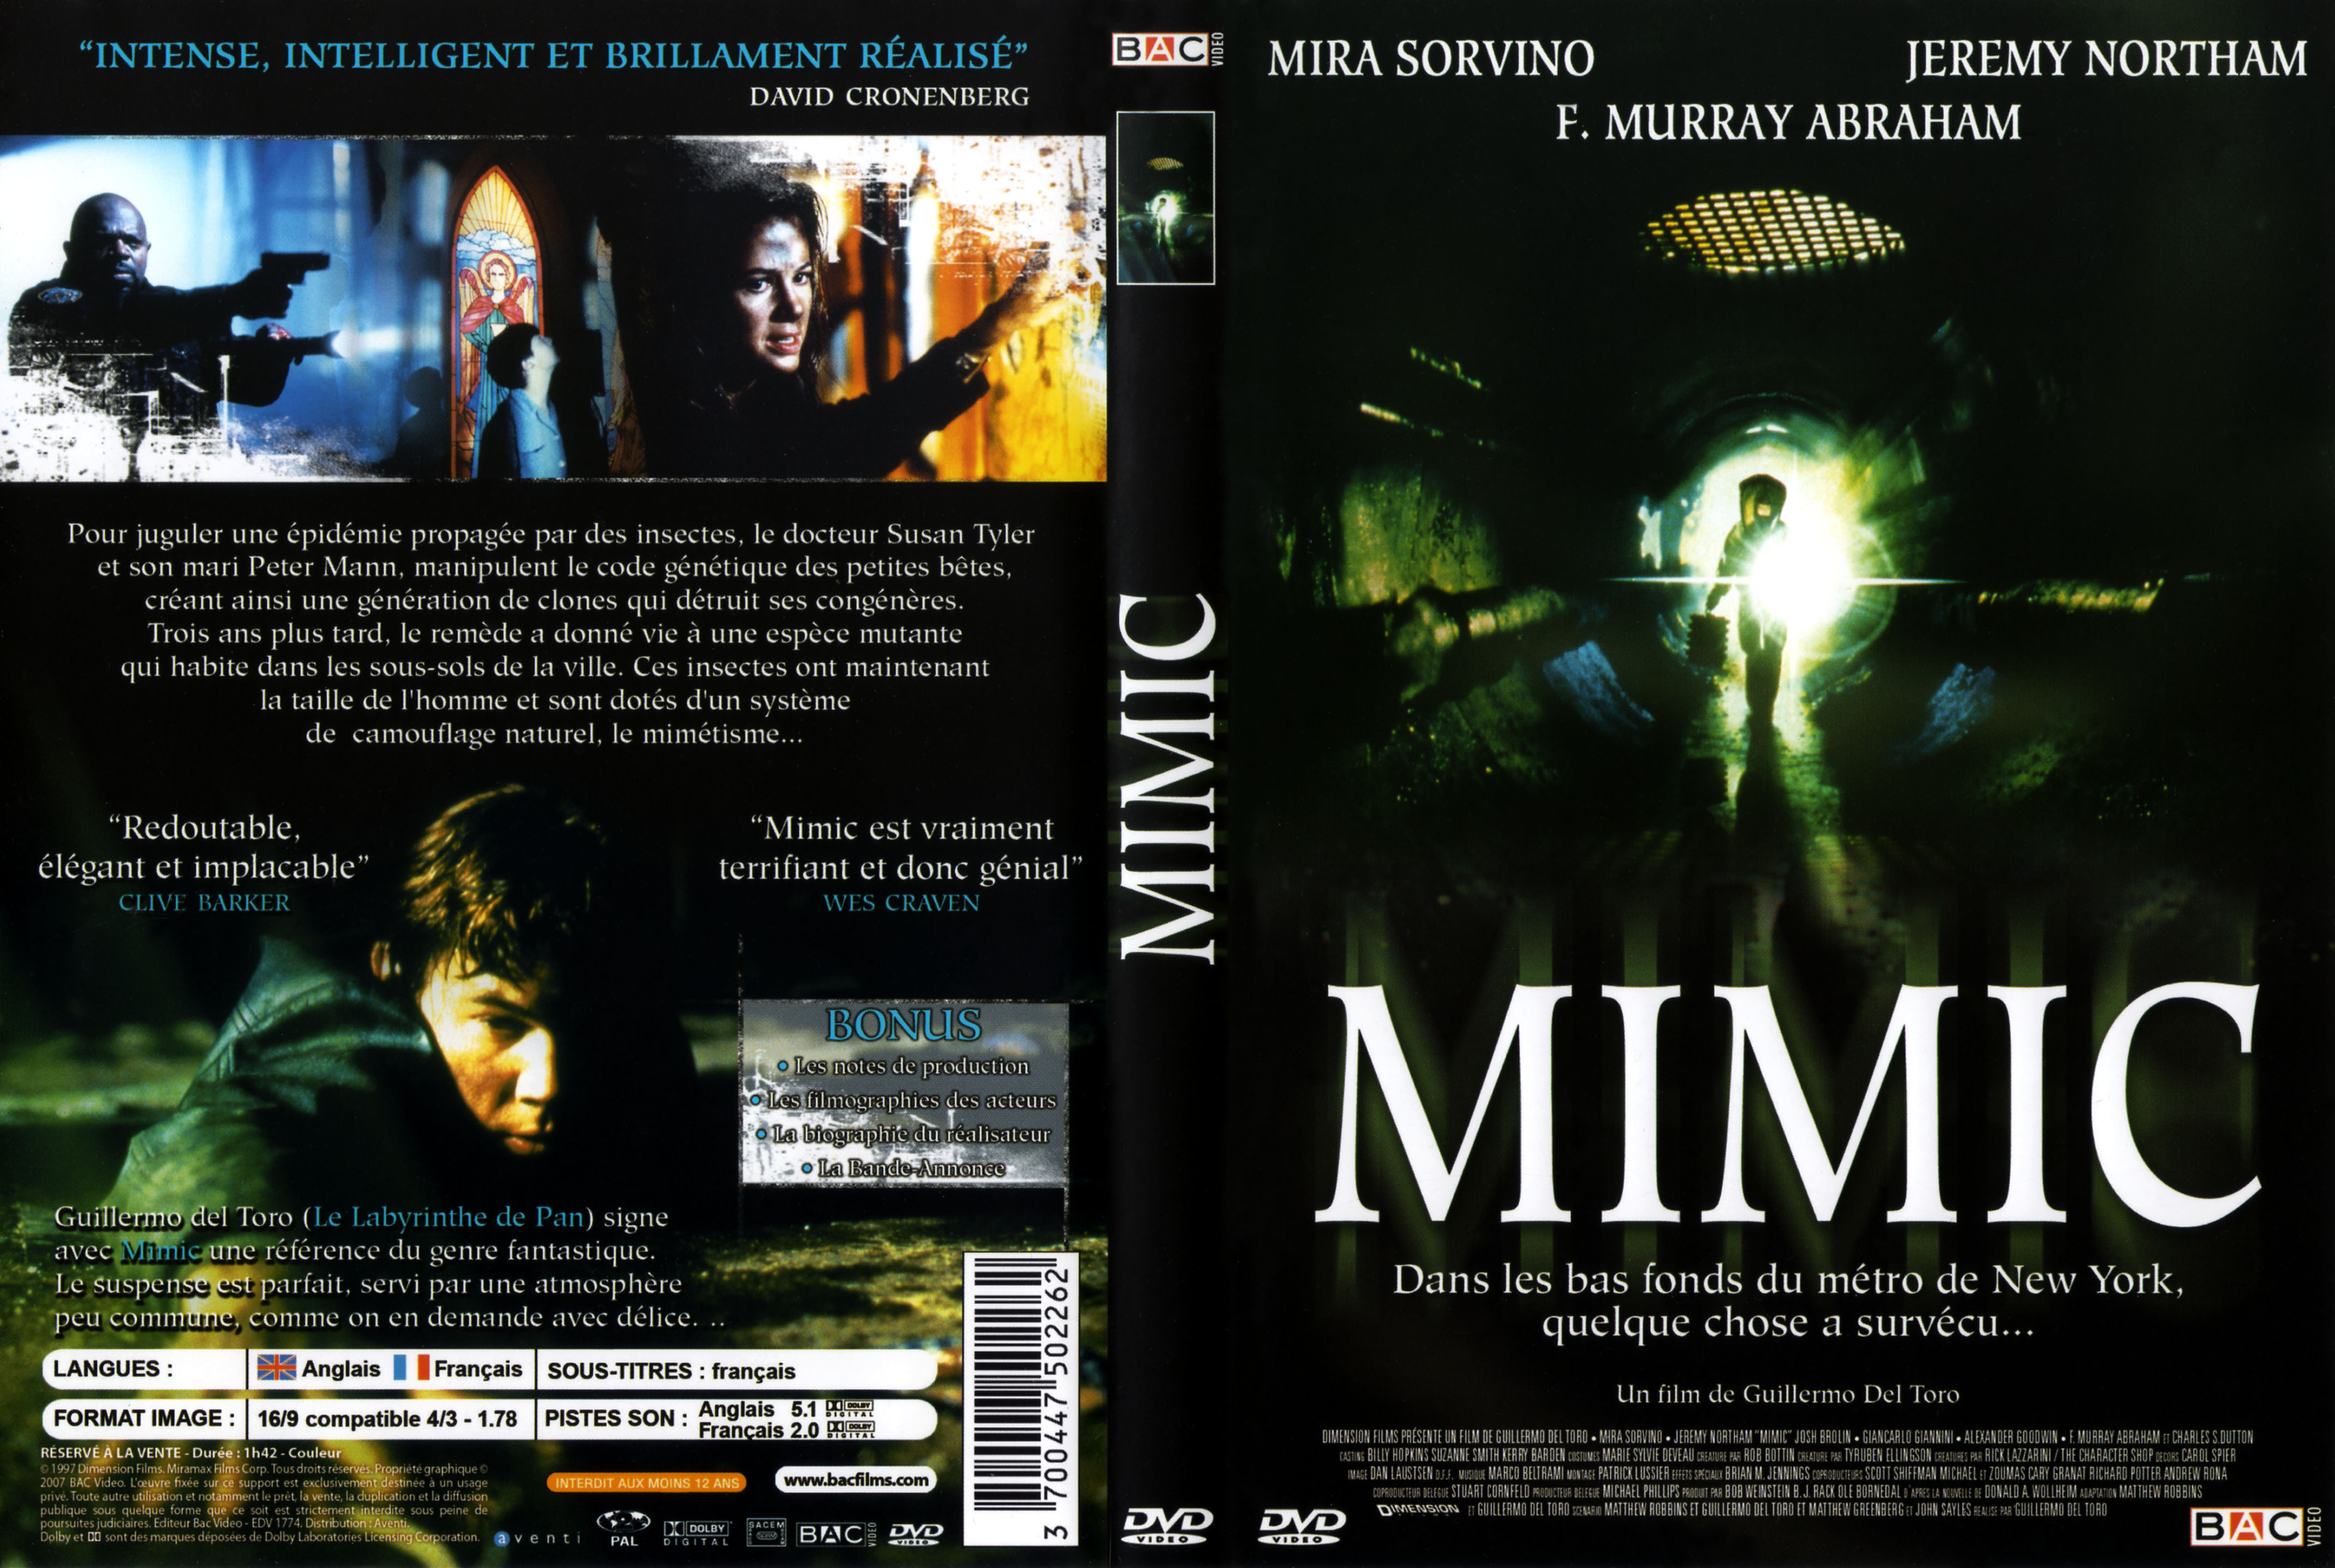 Jaquette DVD Mimic v2